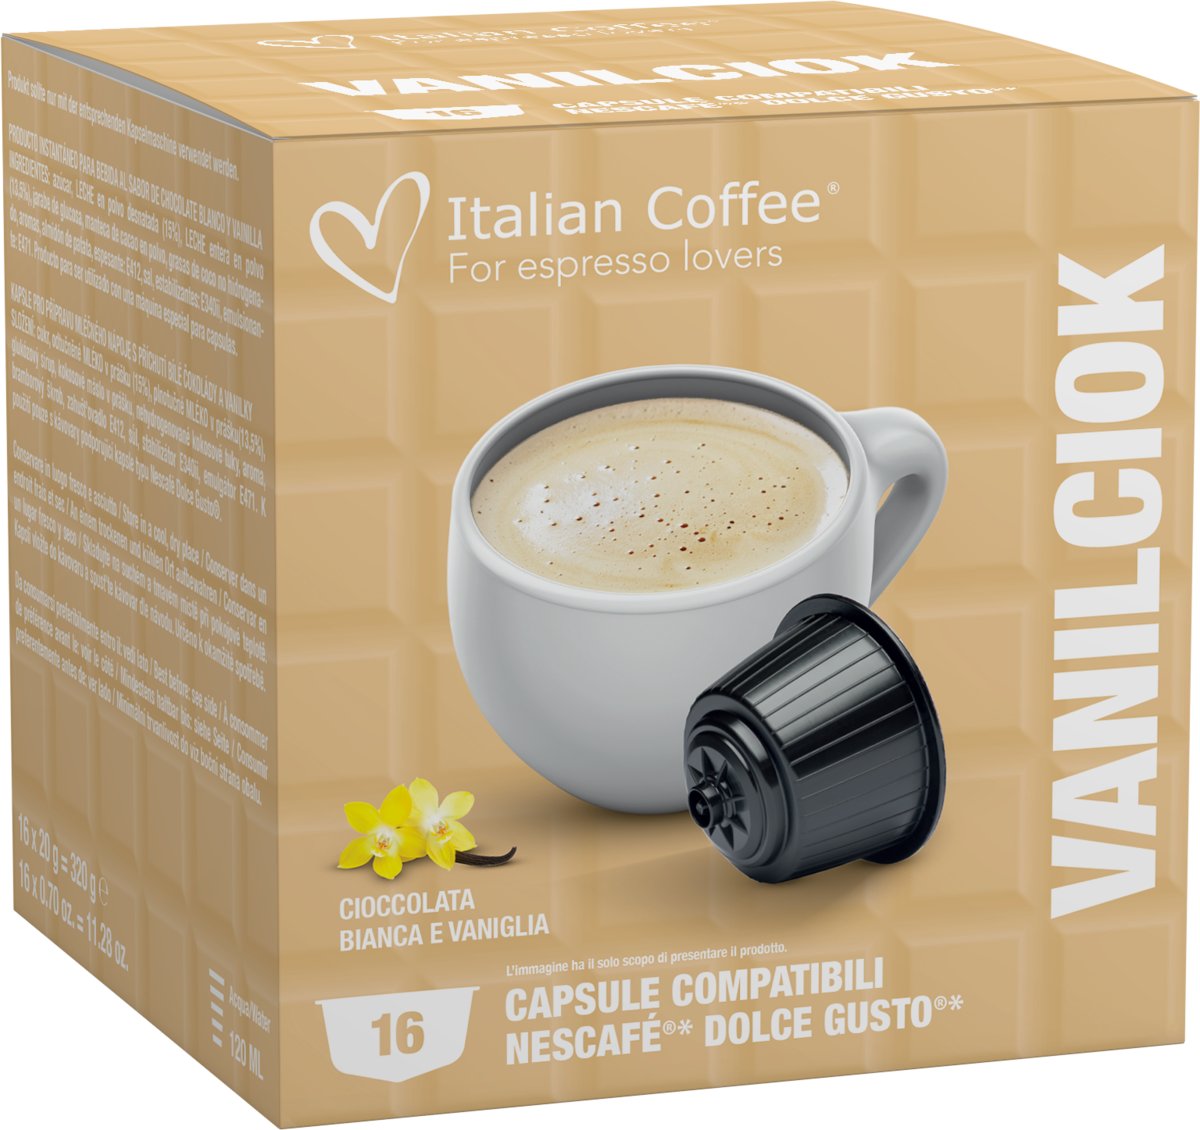 Italian Coffee Vanilciok (Cioccolata Bianca e Vaniglia) kapsułki do Dolce Gusto - 16 kapsułek